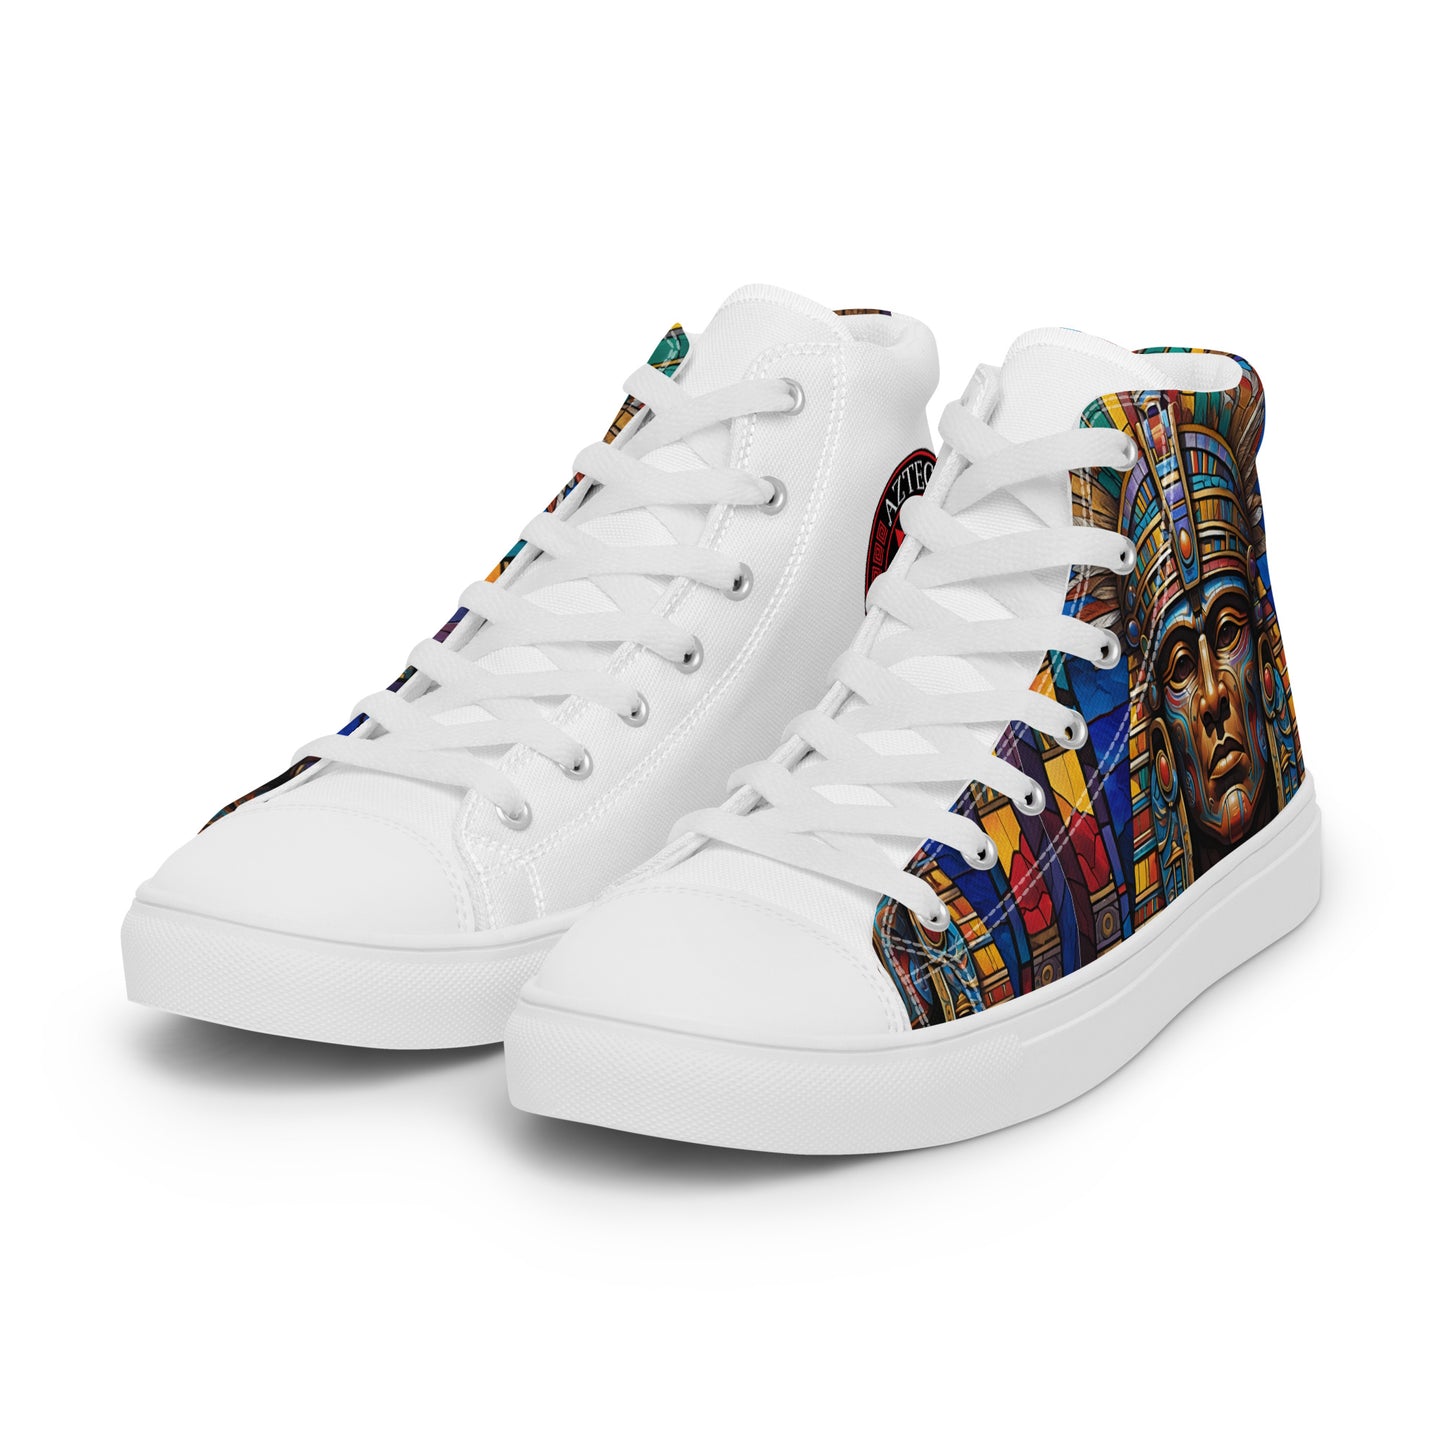 Guerrero Tonahuac - Men - White - High top shoes